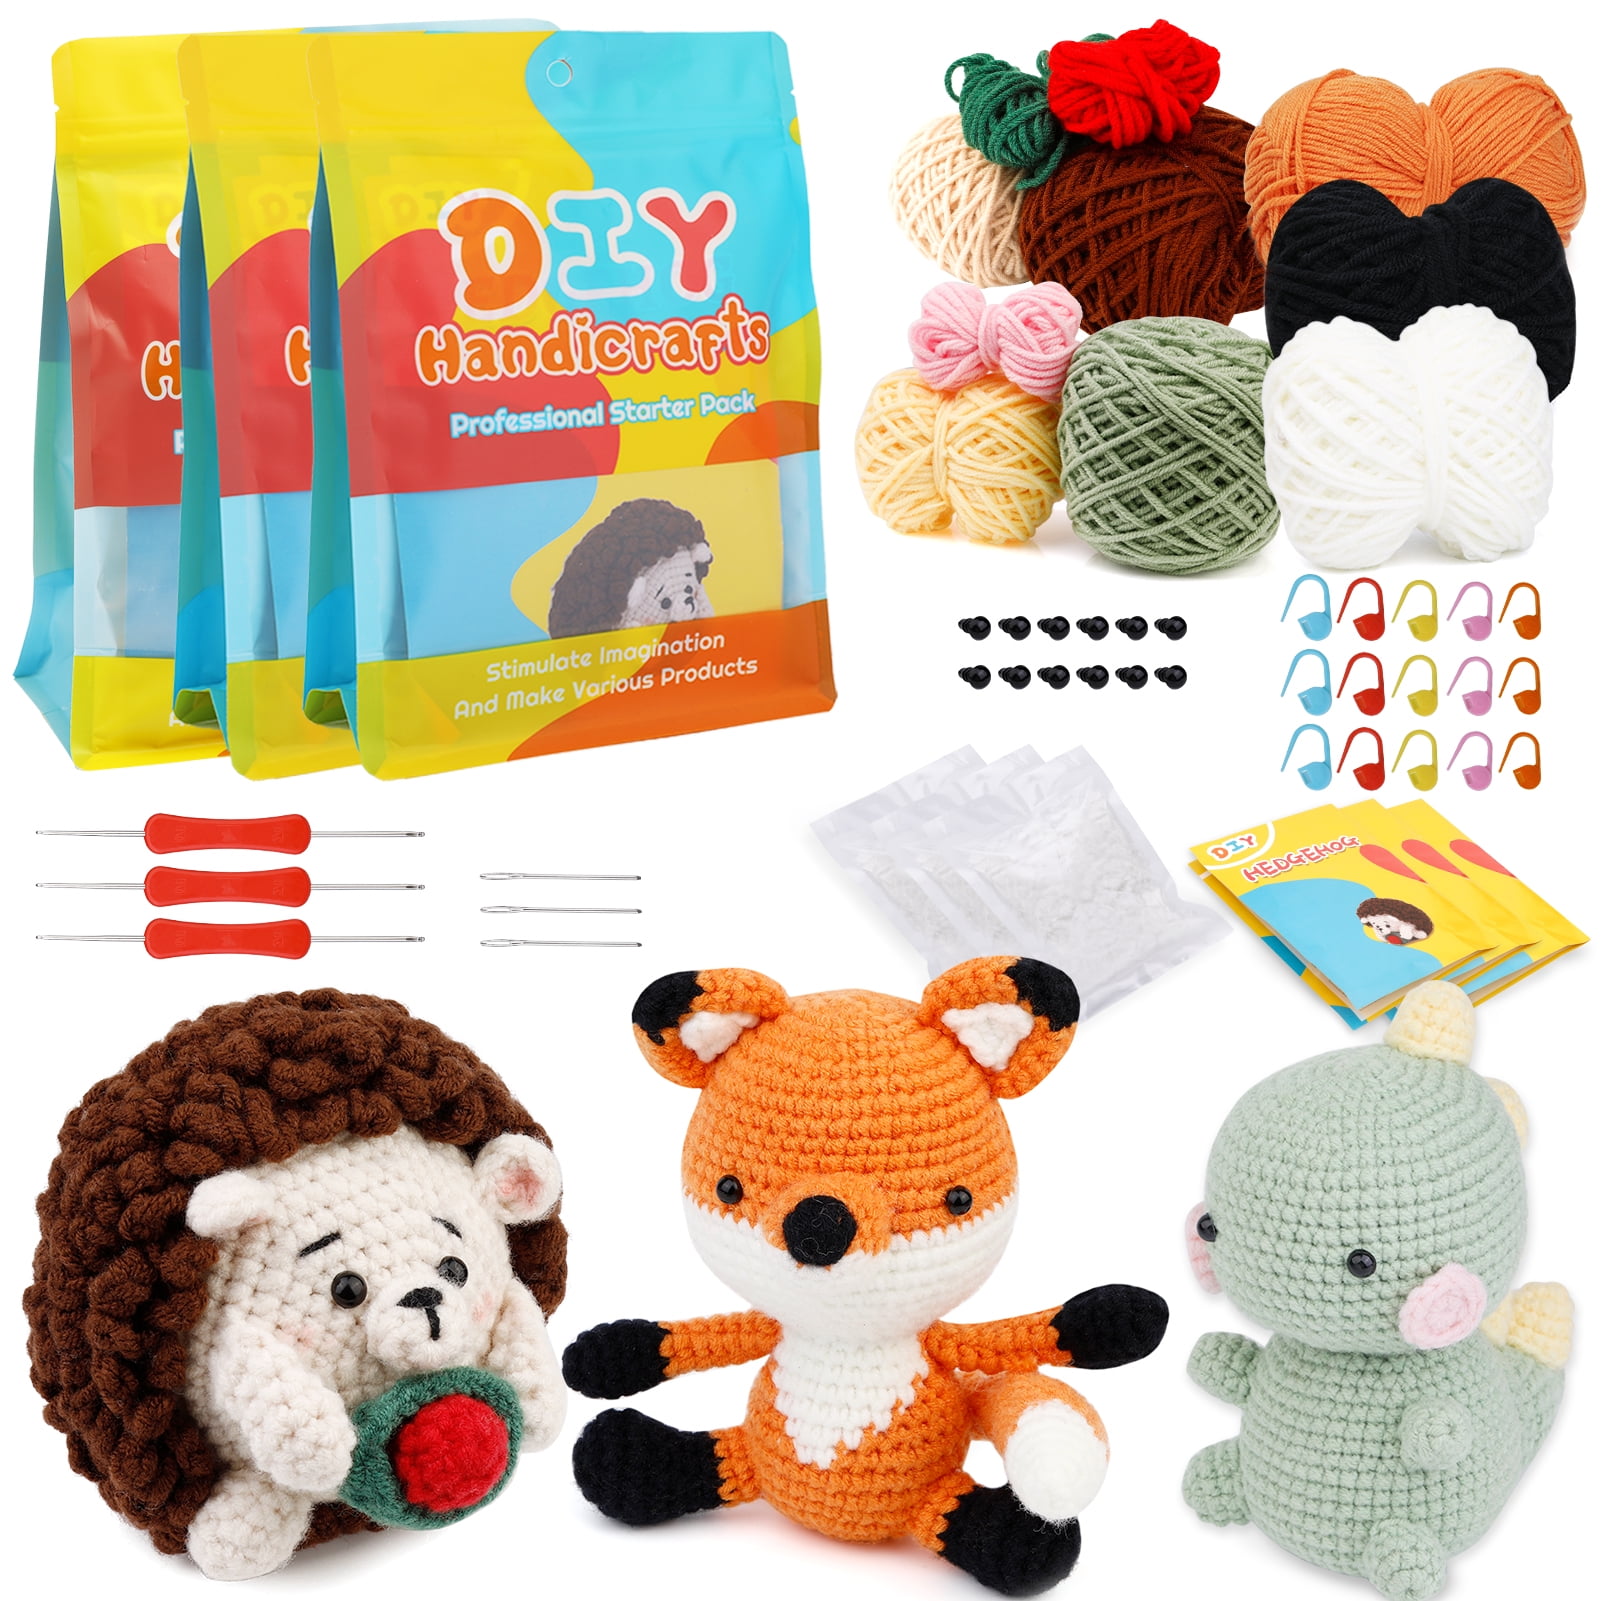 Crochet Kit for Beginners, 5PCS Crochet Plant Kit for Adults Kids-Amigurumi  Crochet Kit include Every Tool, Videos Tutorials, Crochet Starter Kit